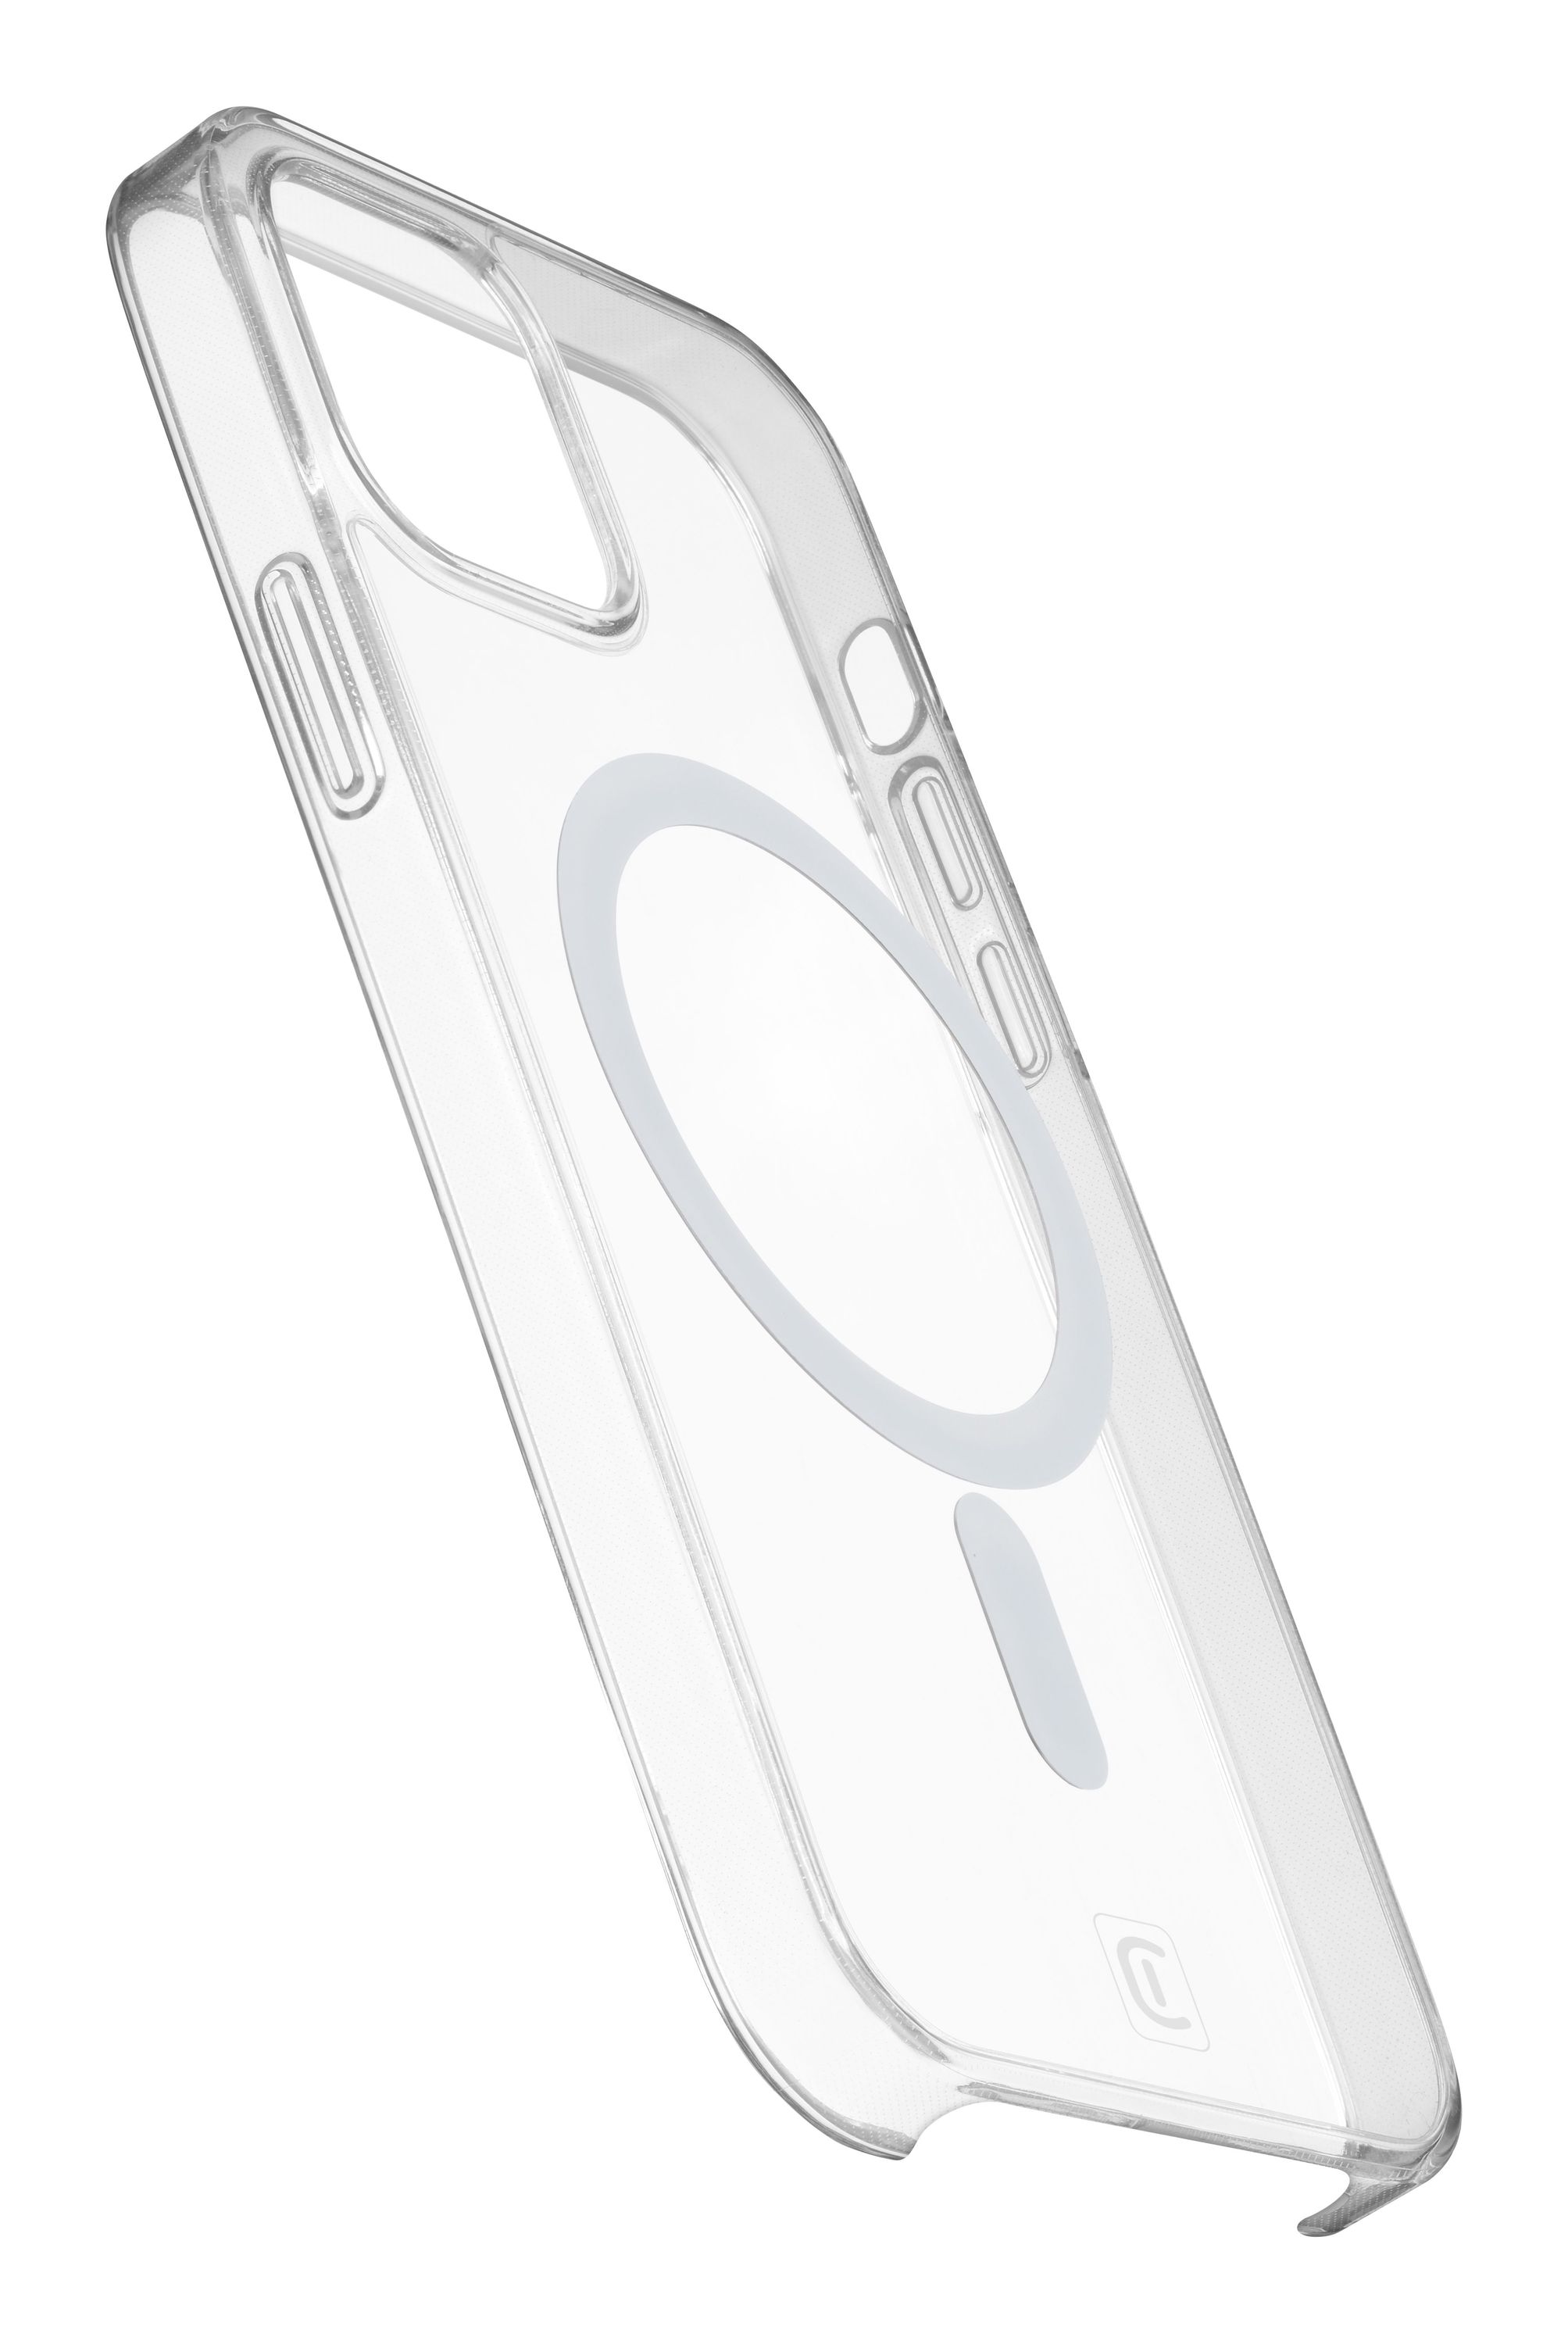 Funda para iPhone 12 Mini transparente con MagSafe de Apple